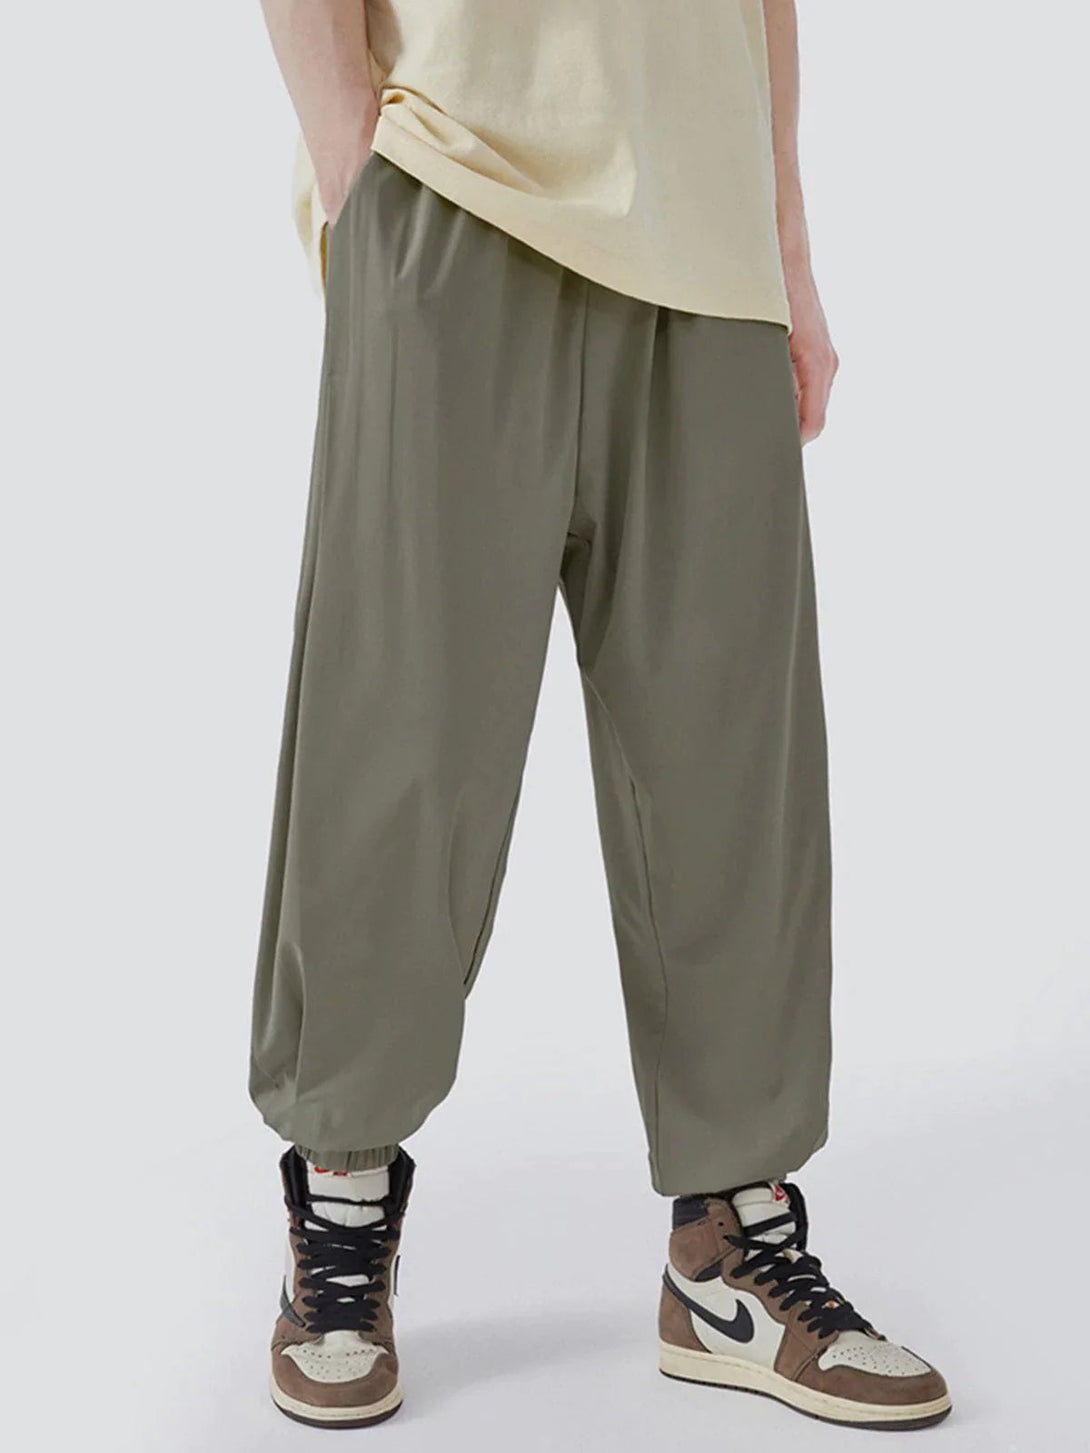 Majesda® - Loose Pleats Pants outfit ideas streetwear fashion